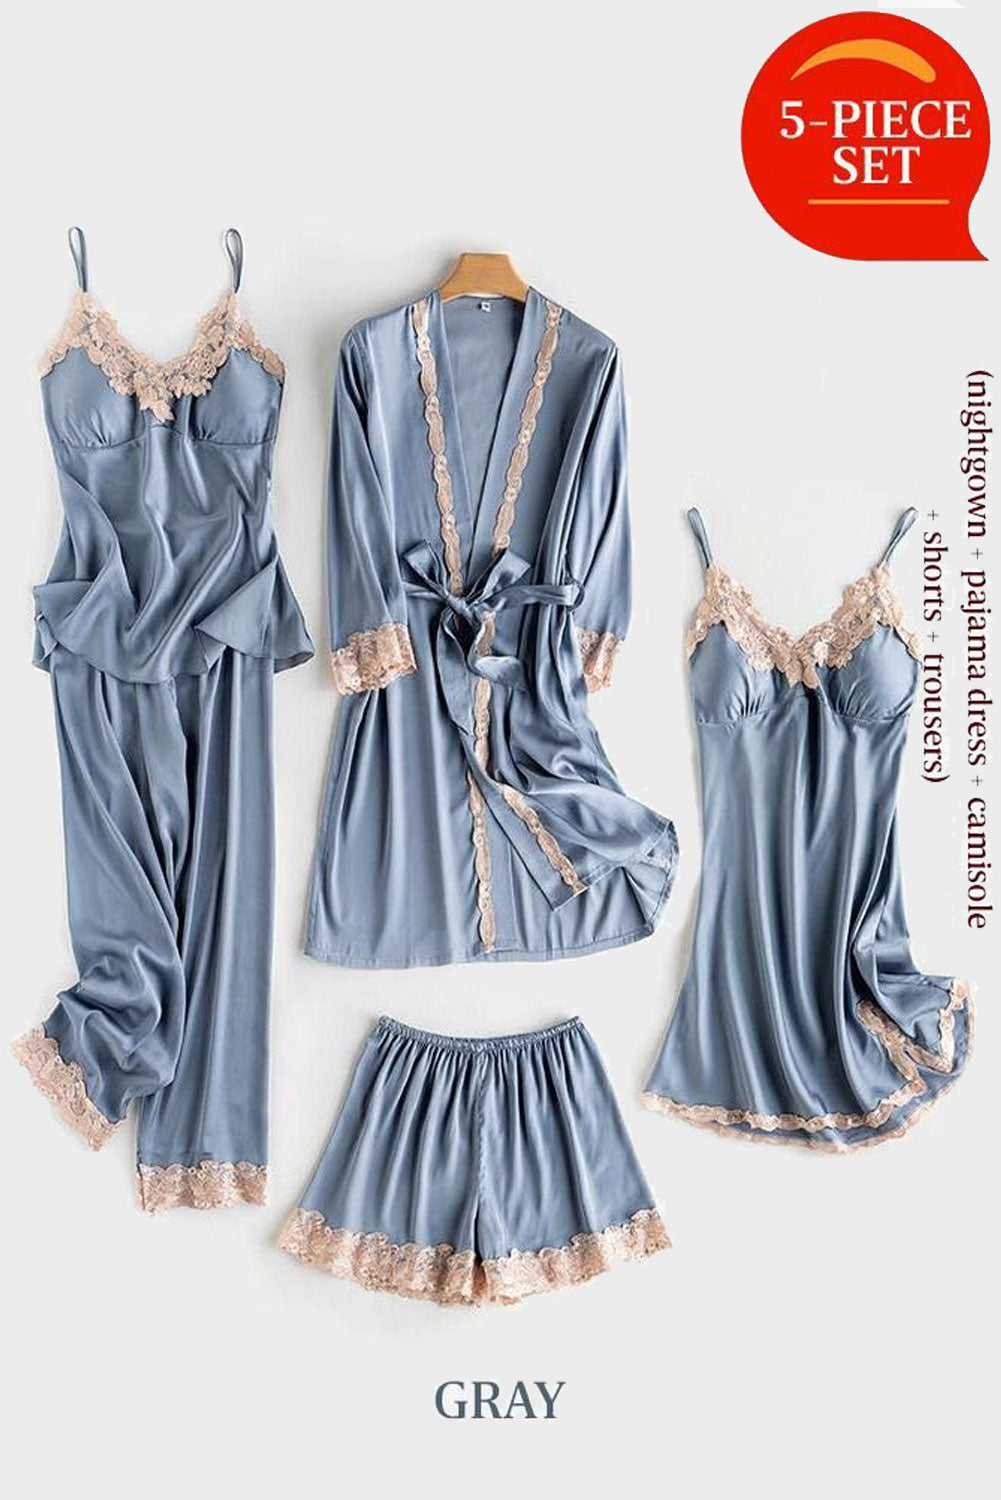 Gray Soft Comfortable Ice Silk Lace Pajamas 5pcs Set